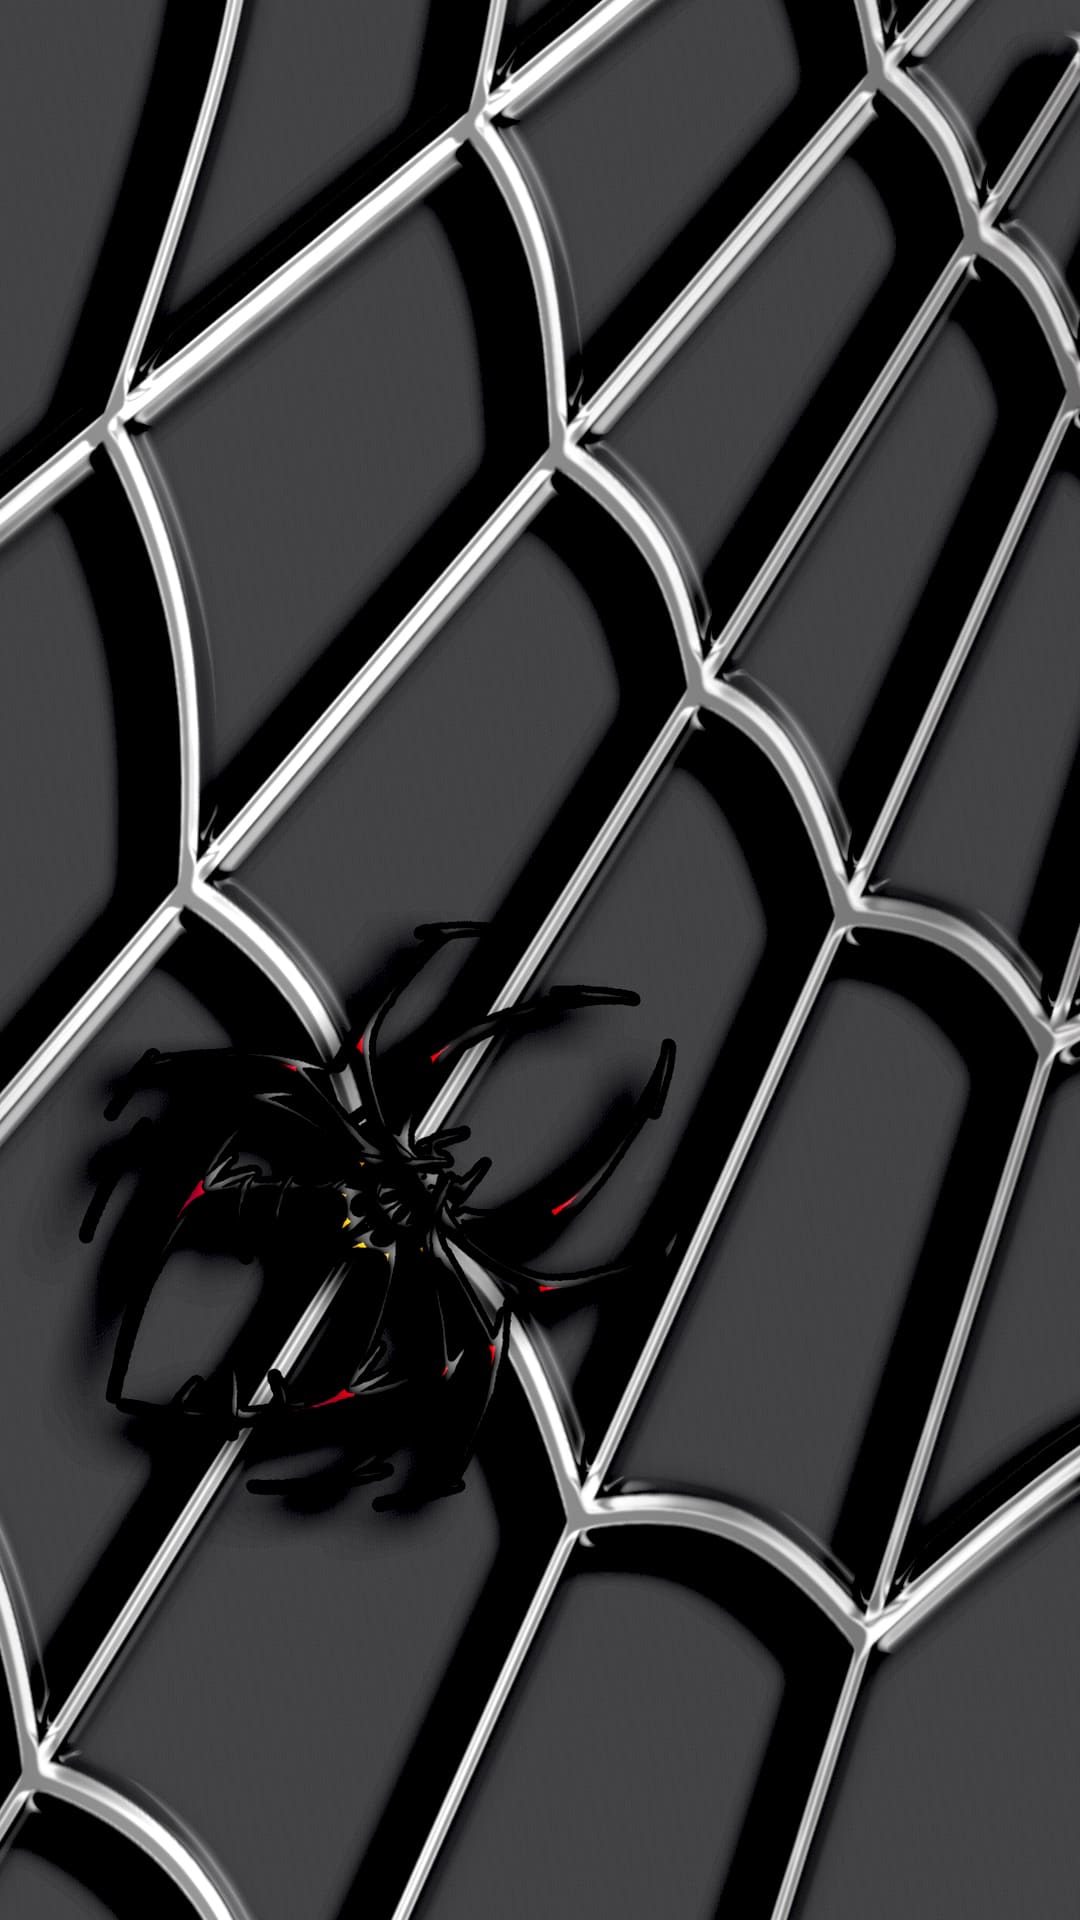 spider-phone-wallpaper-thypix-51